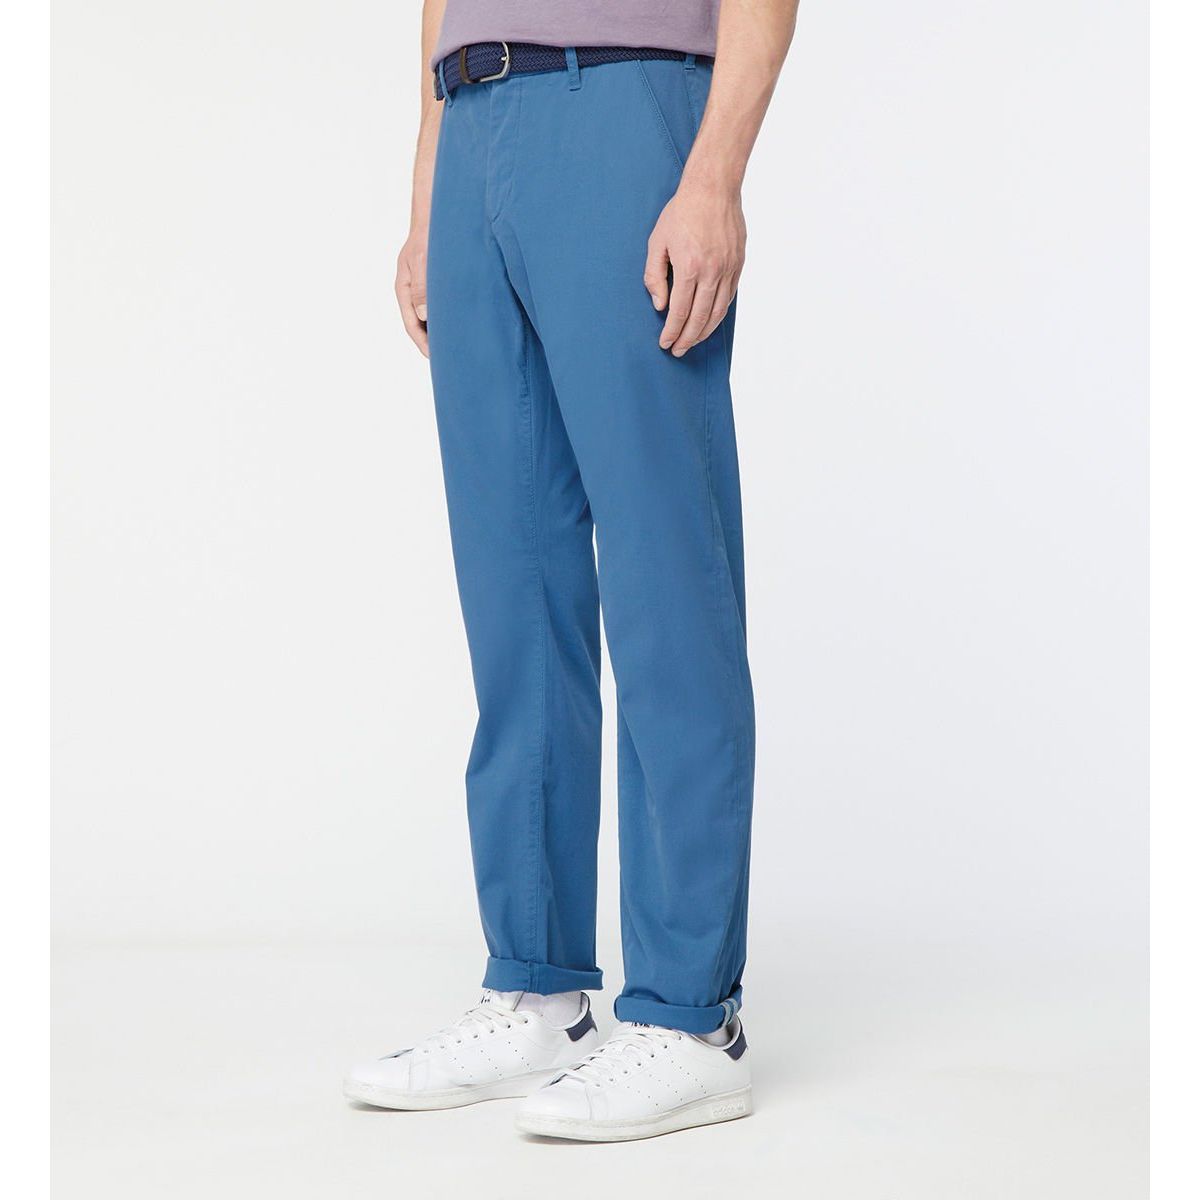 Pantalon chino uni Bleu Galeries Lafayette Garçon Vêtements Pantalons & Jeans Pantalons Chinos 